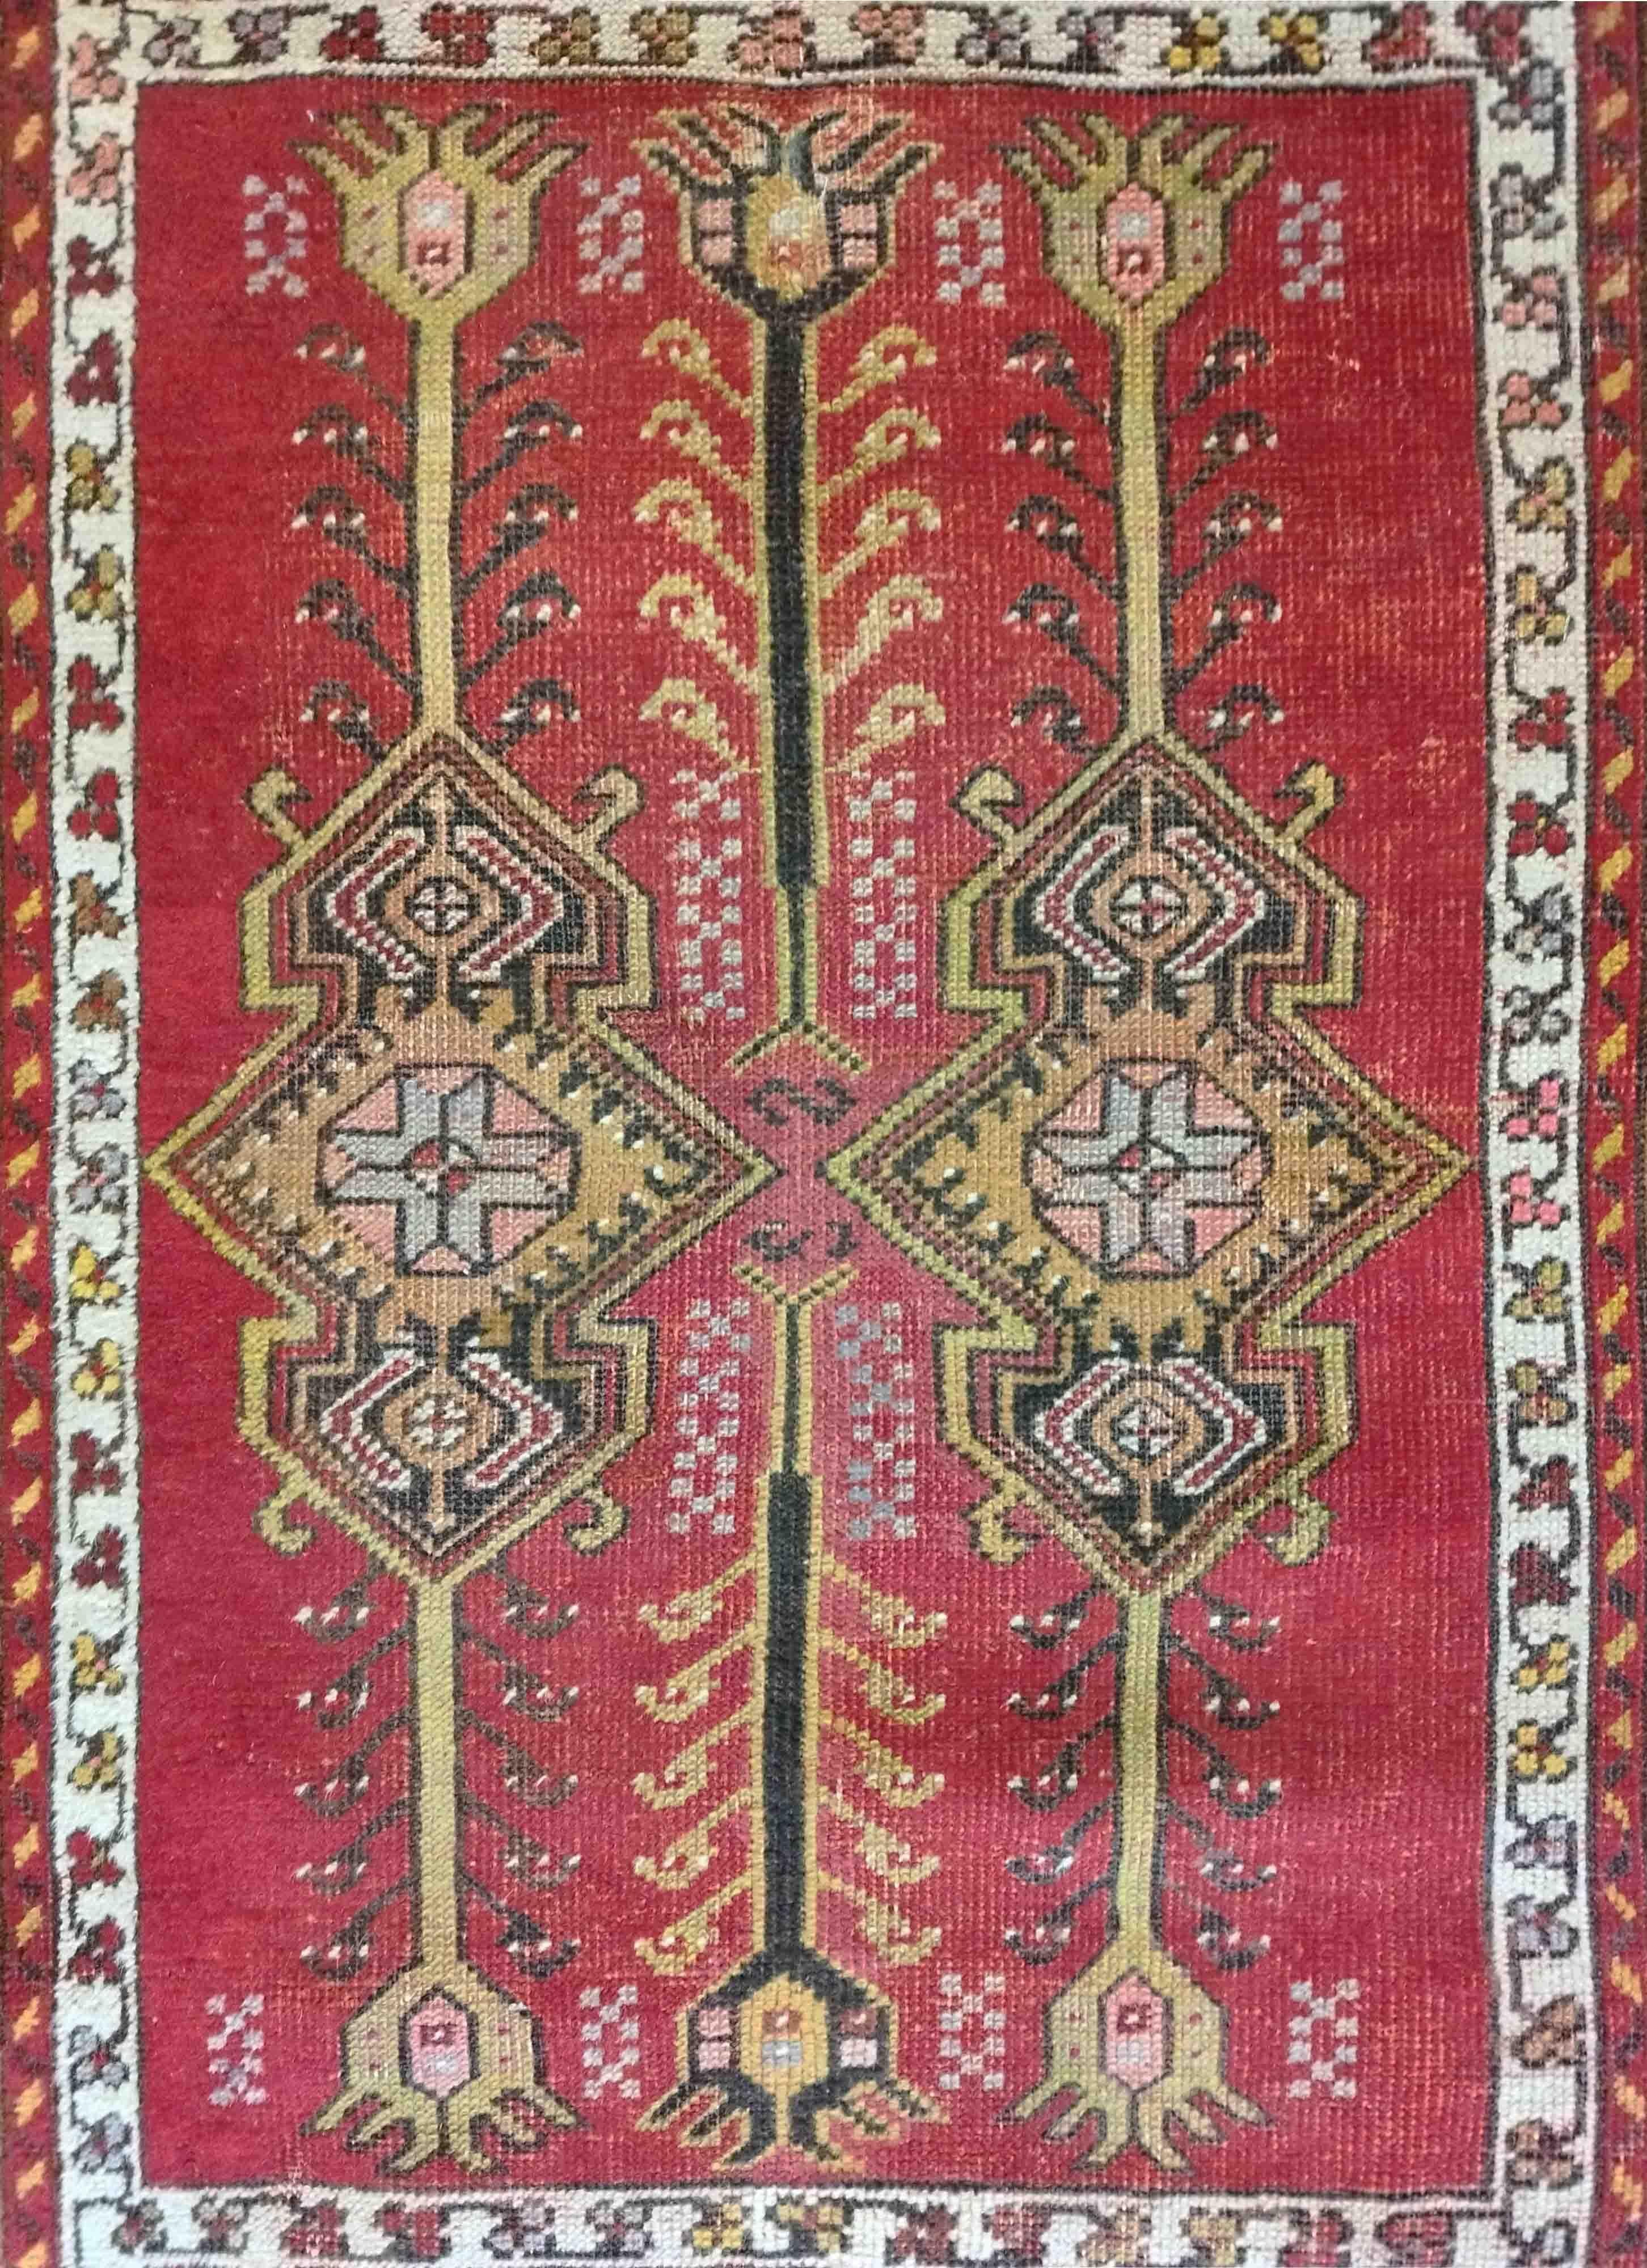  Kirchir Turkish Carpet, 19th Century - N° 728 For Sale 6